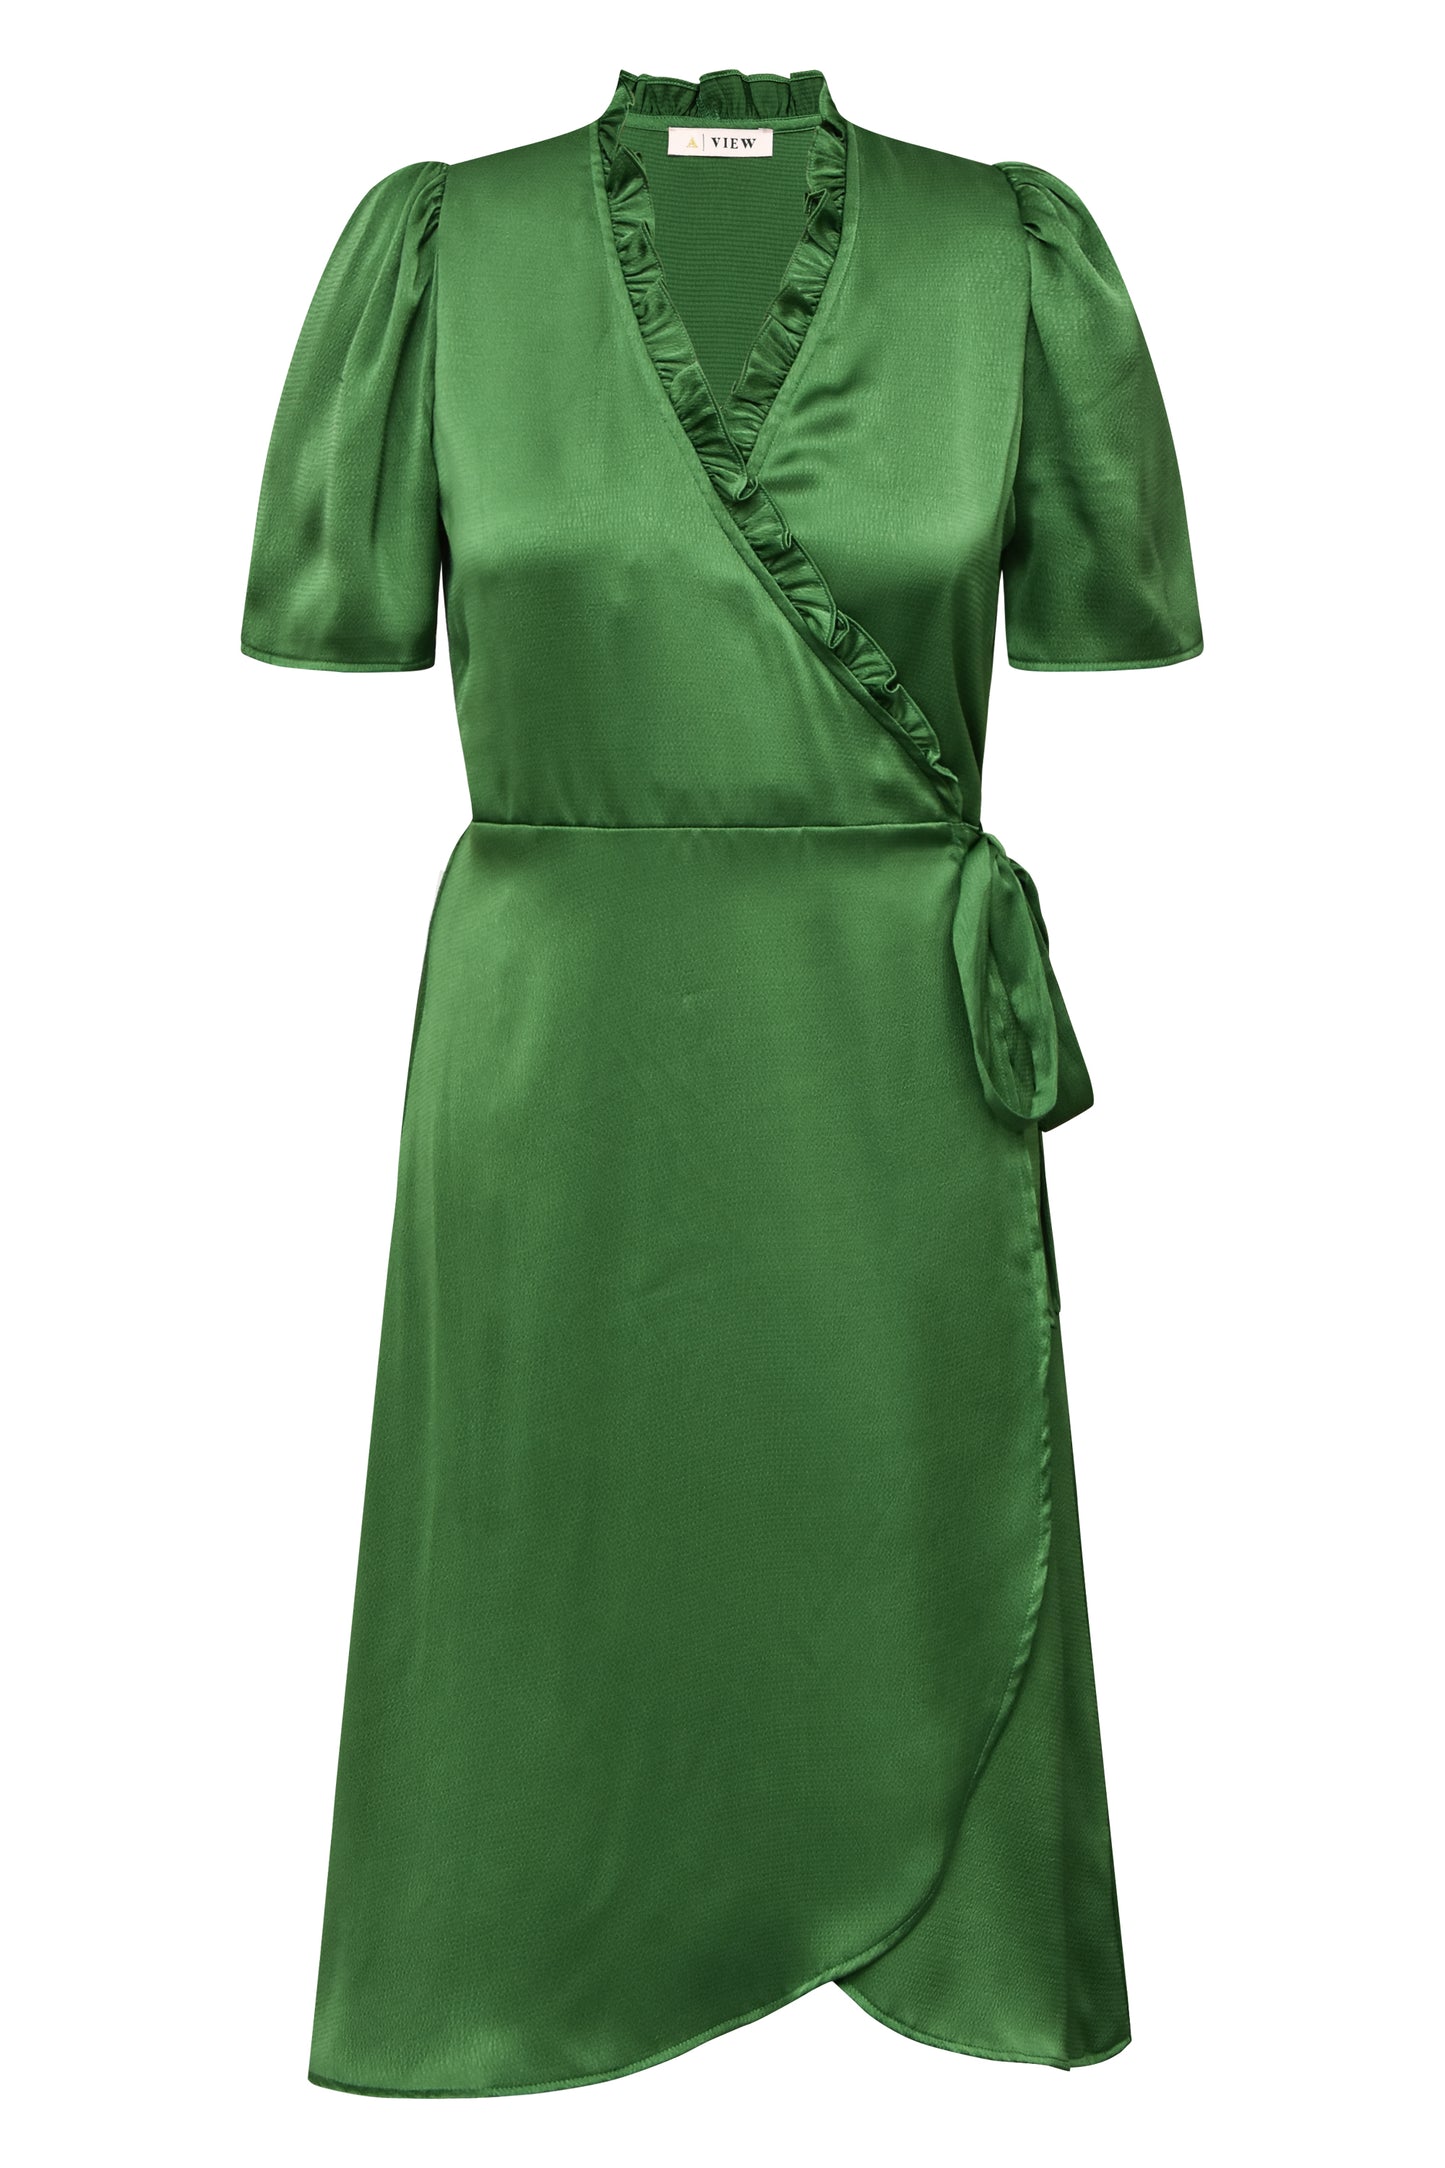 A-VIEW - Peony medi dress - Grøn